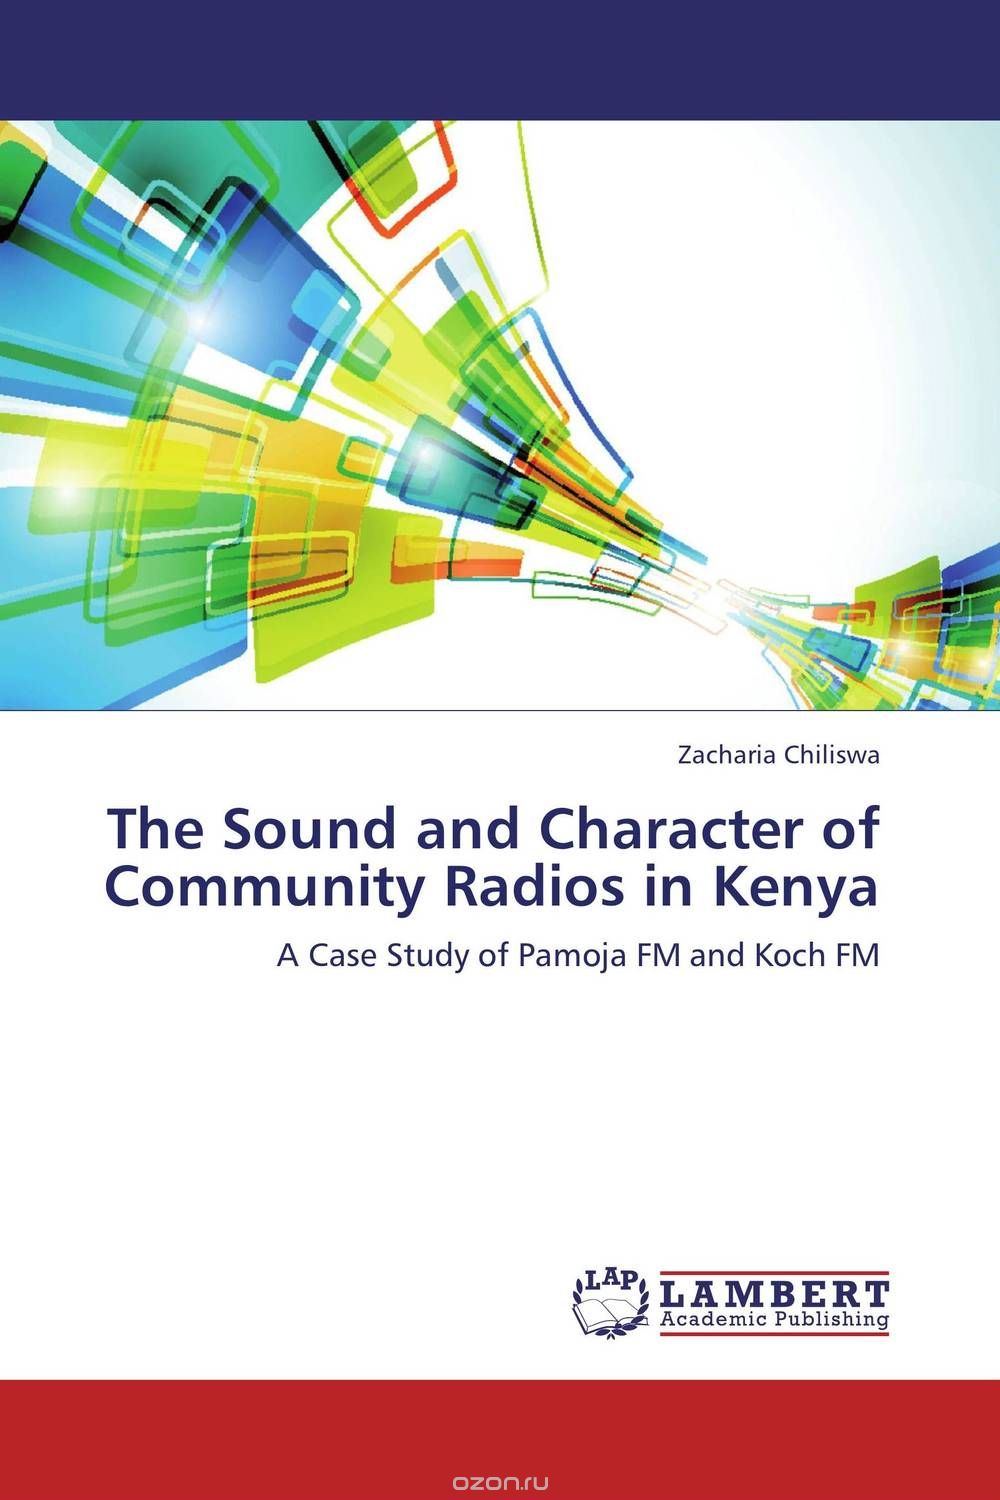 Скачать книгу "The Sound and Character of Community Radios in Kenya"